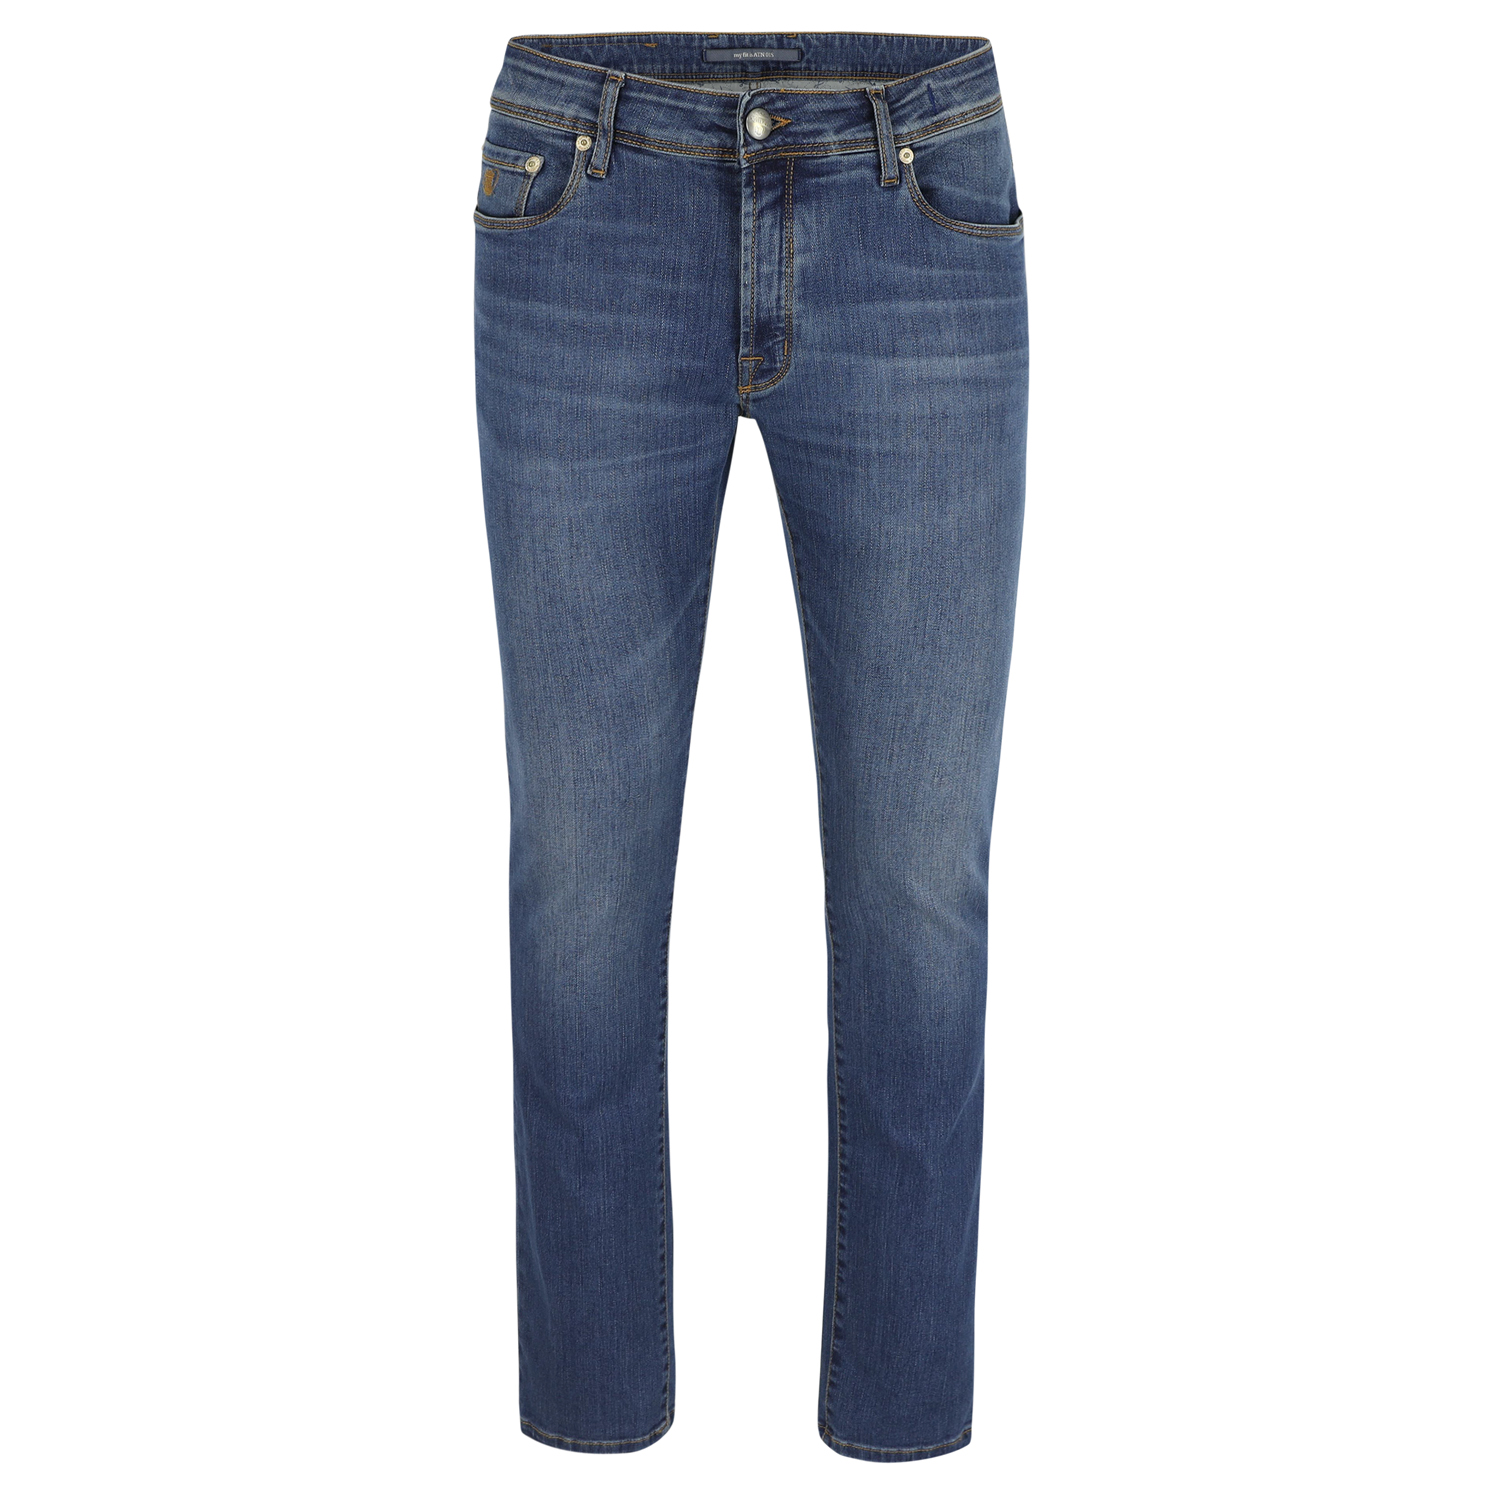 Atelier Noterman - jeans in blauwe denim in used wassing - 40/32 - Heren